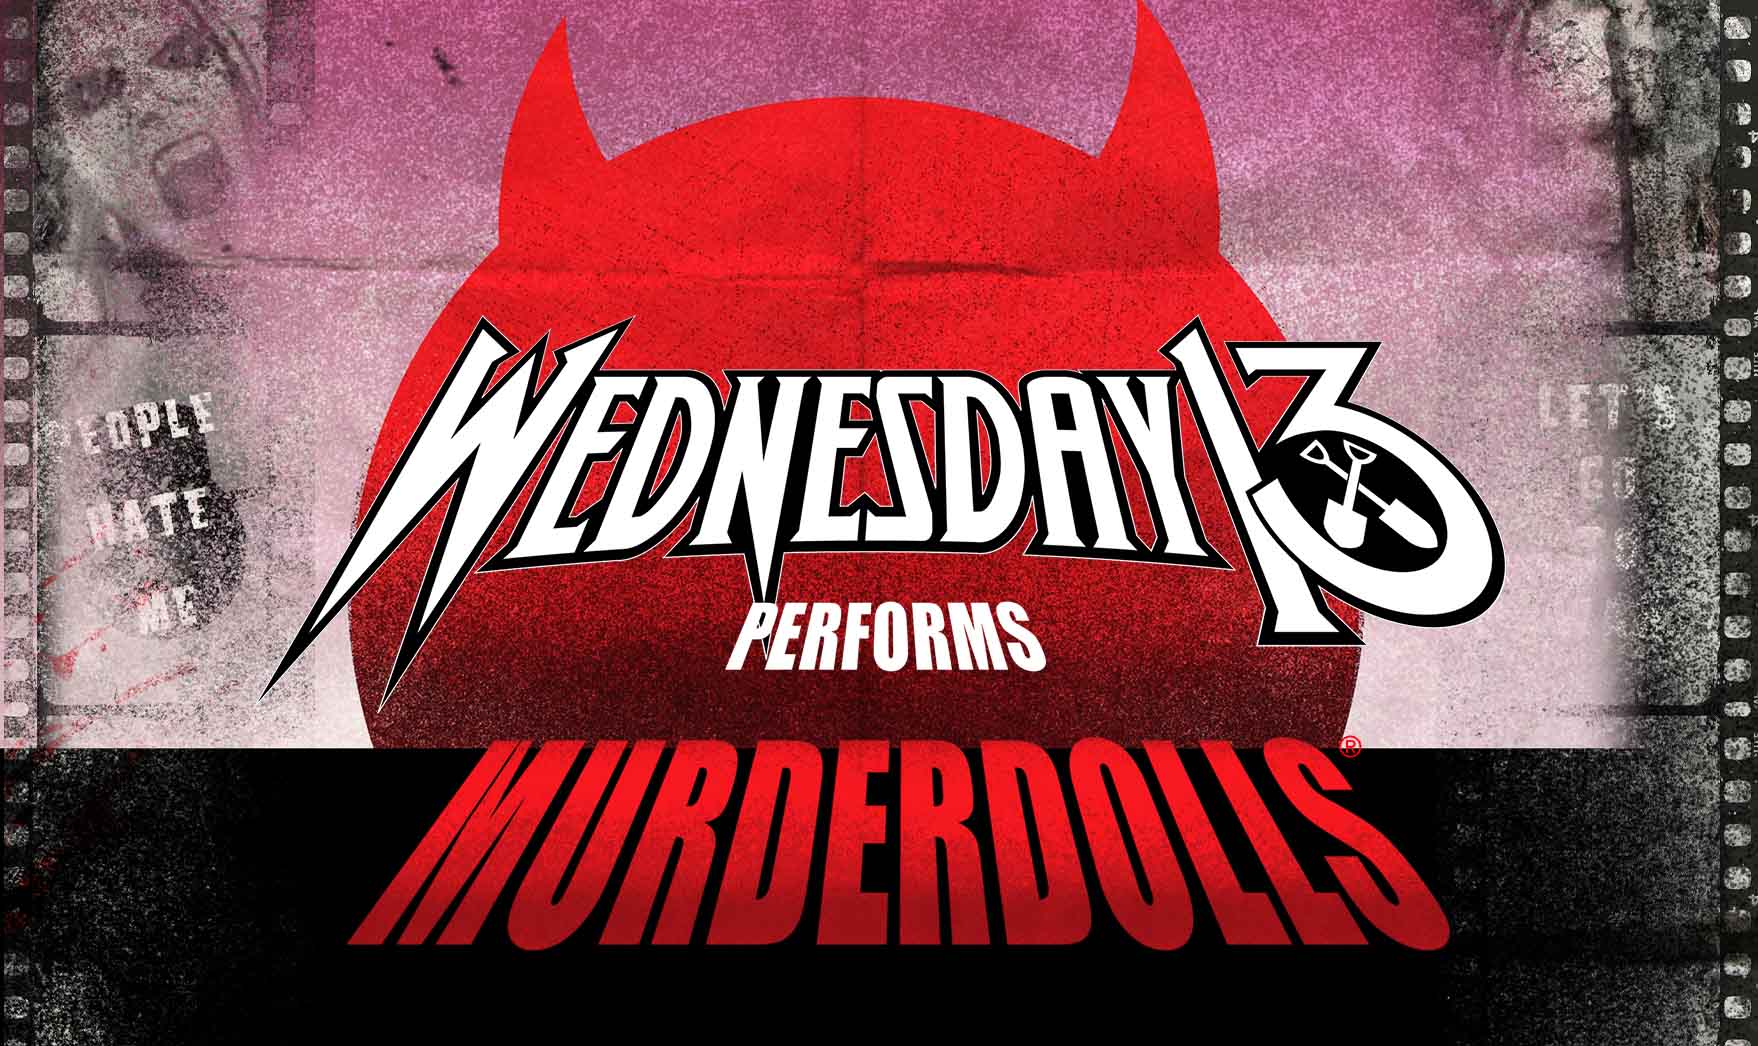 Billets Wednesday 13 Performing Murderdolls (Rock City Nottingham - Nottingham)